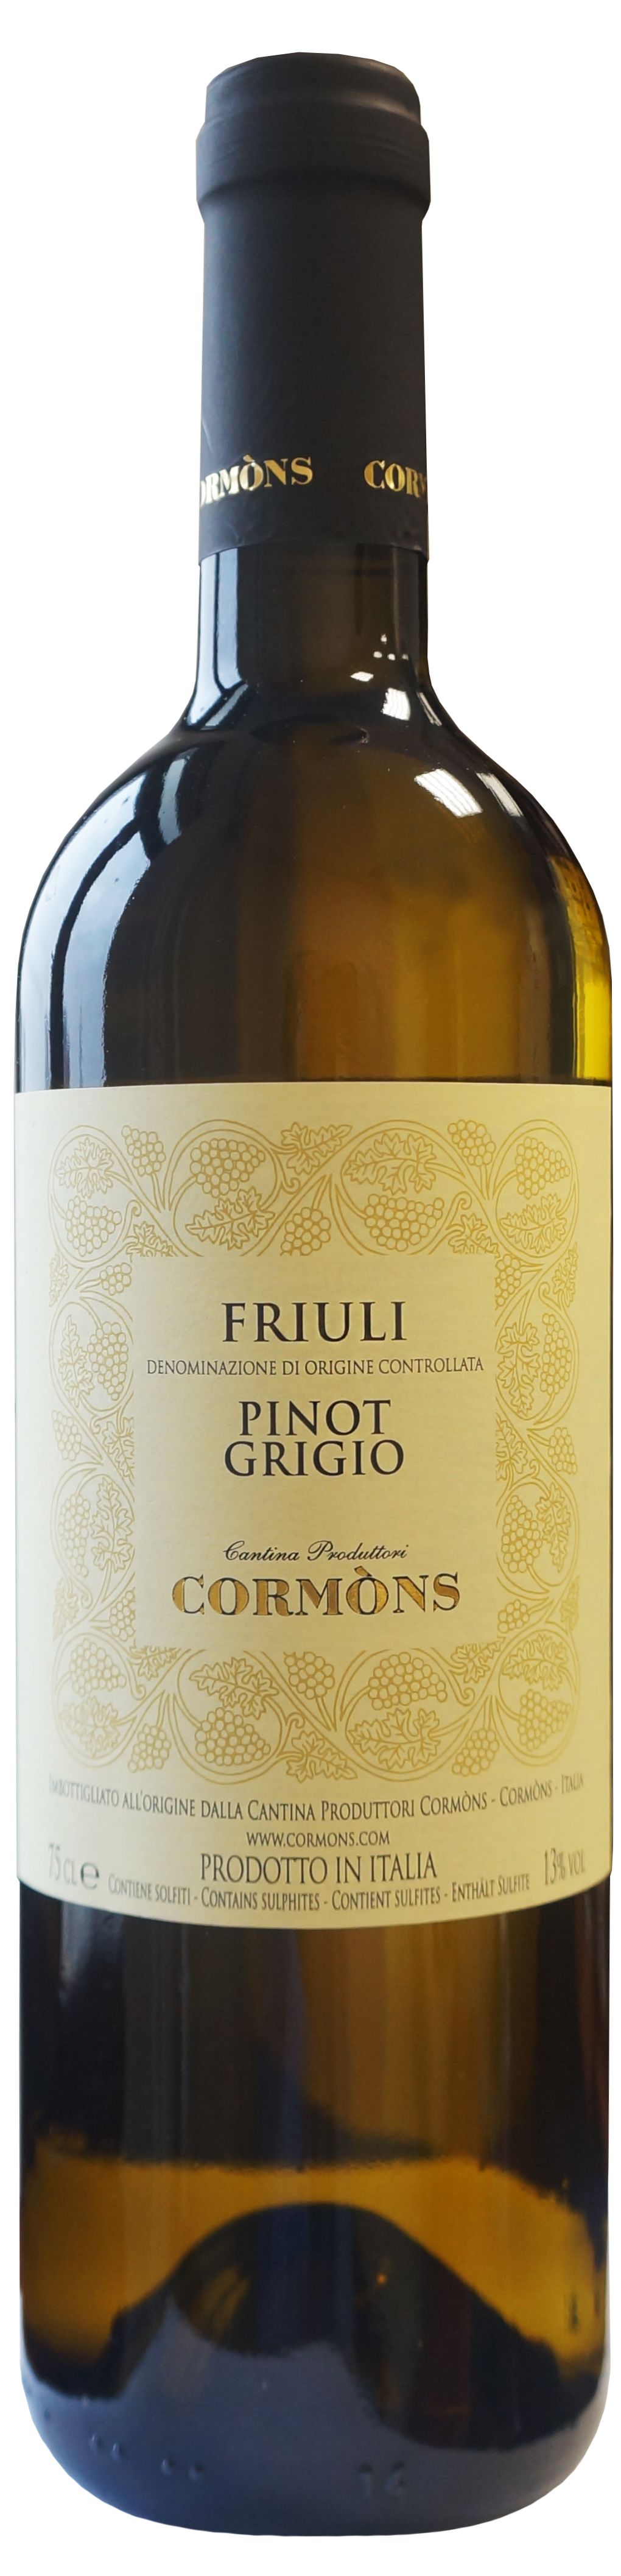 Cormons, Pinot Grigio, 2015